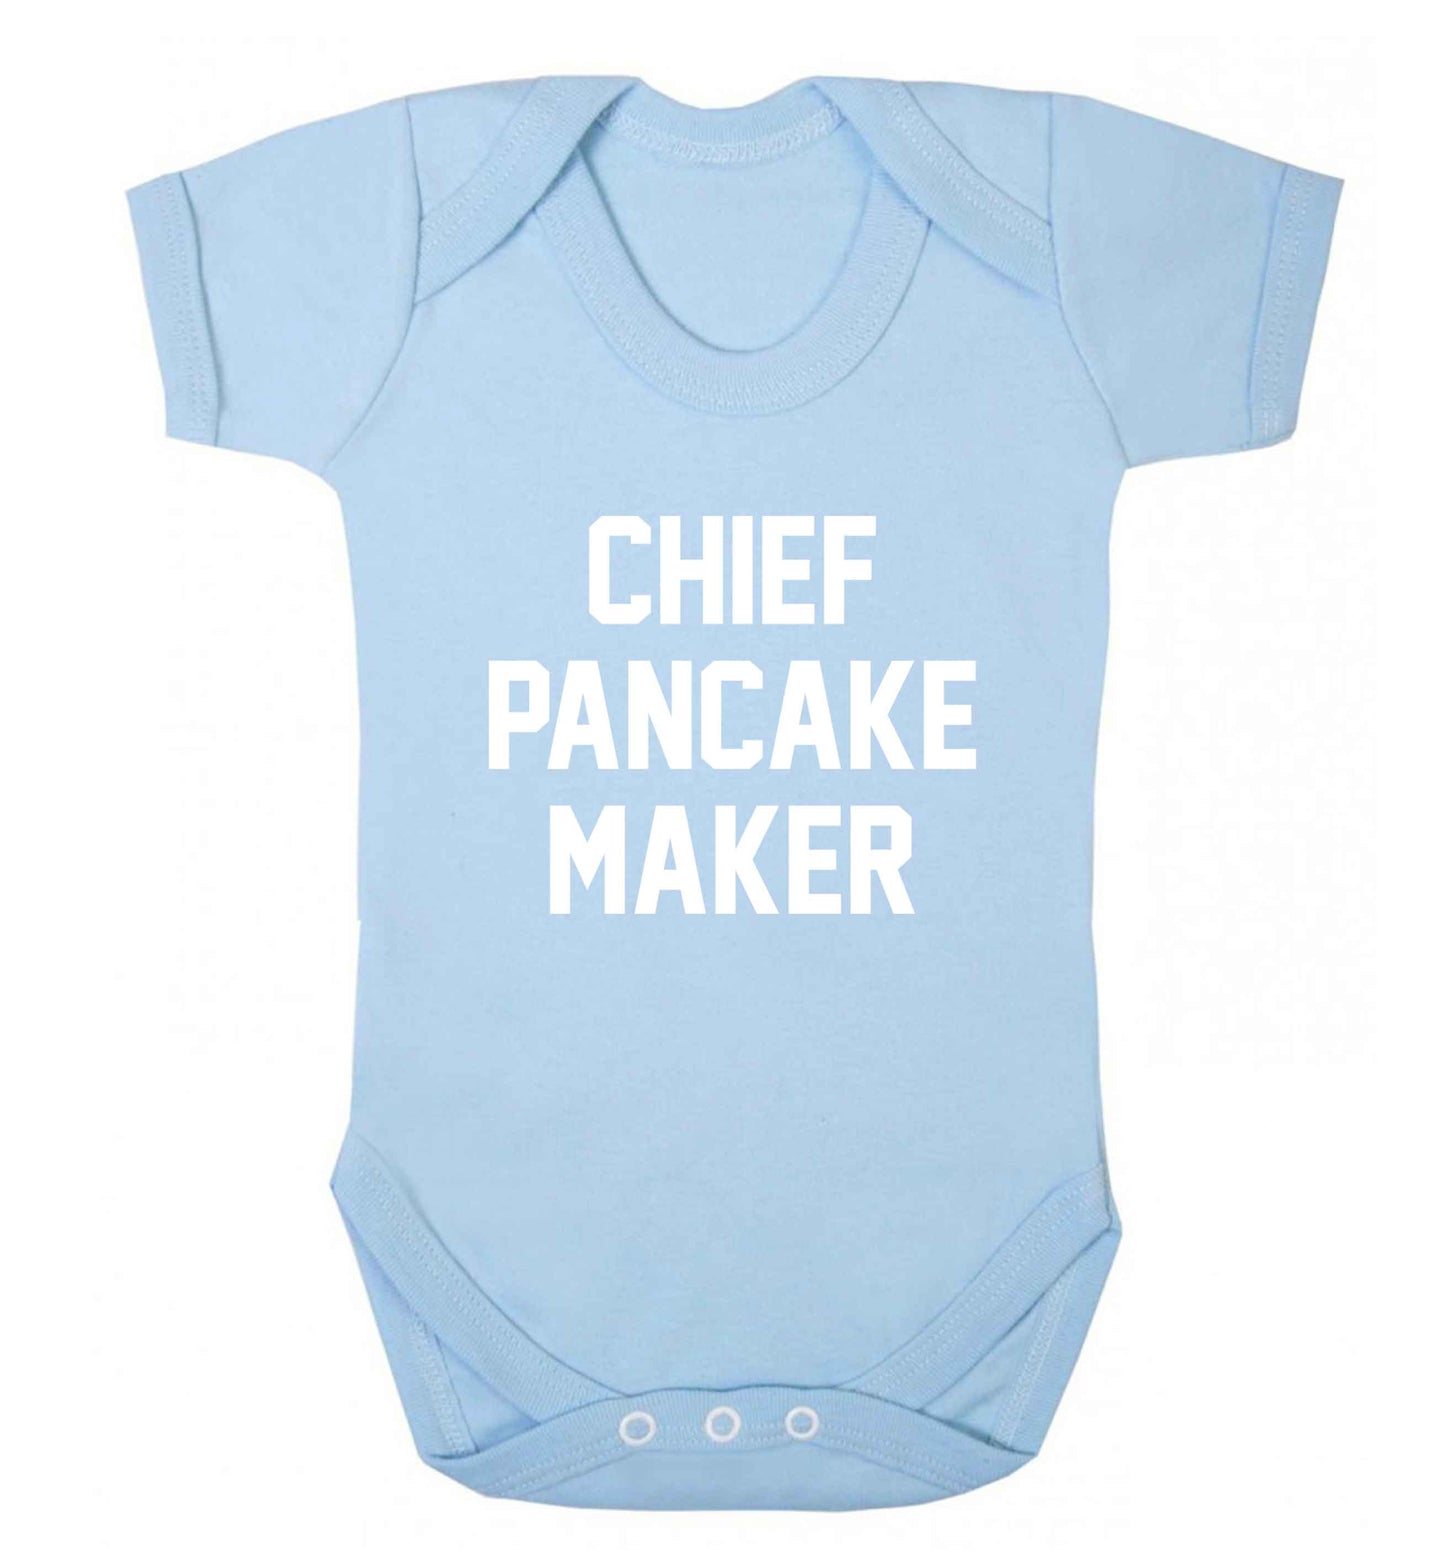 Chief pancake maker baby vest pale blue 18-24 months